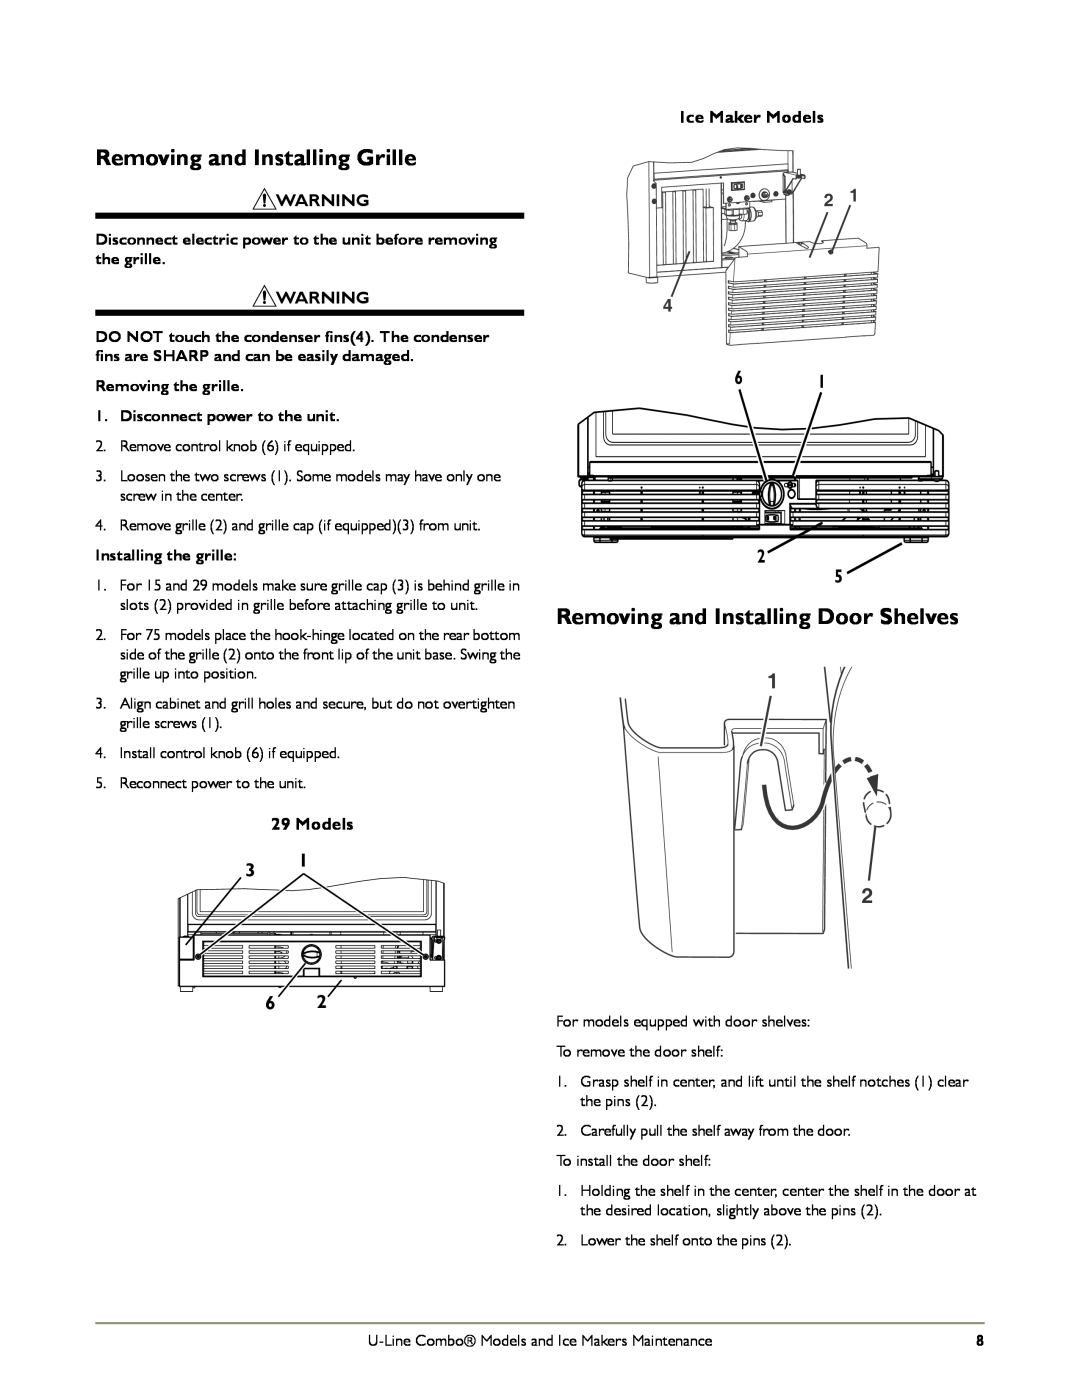 U-Line SP18, CO1175 manual Removing and Installing Grille, Removing and Installing Door Shelves, Ice Maker Models 